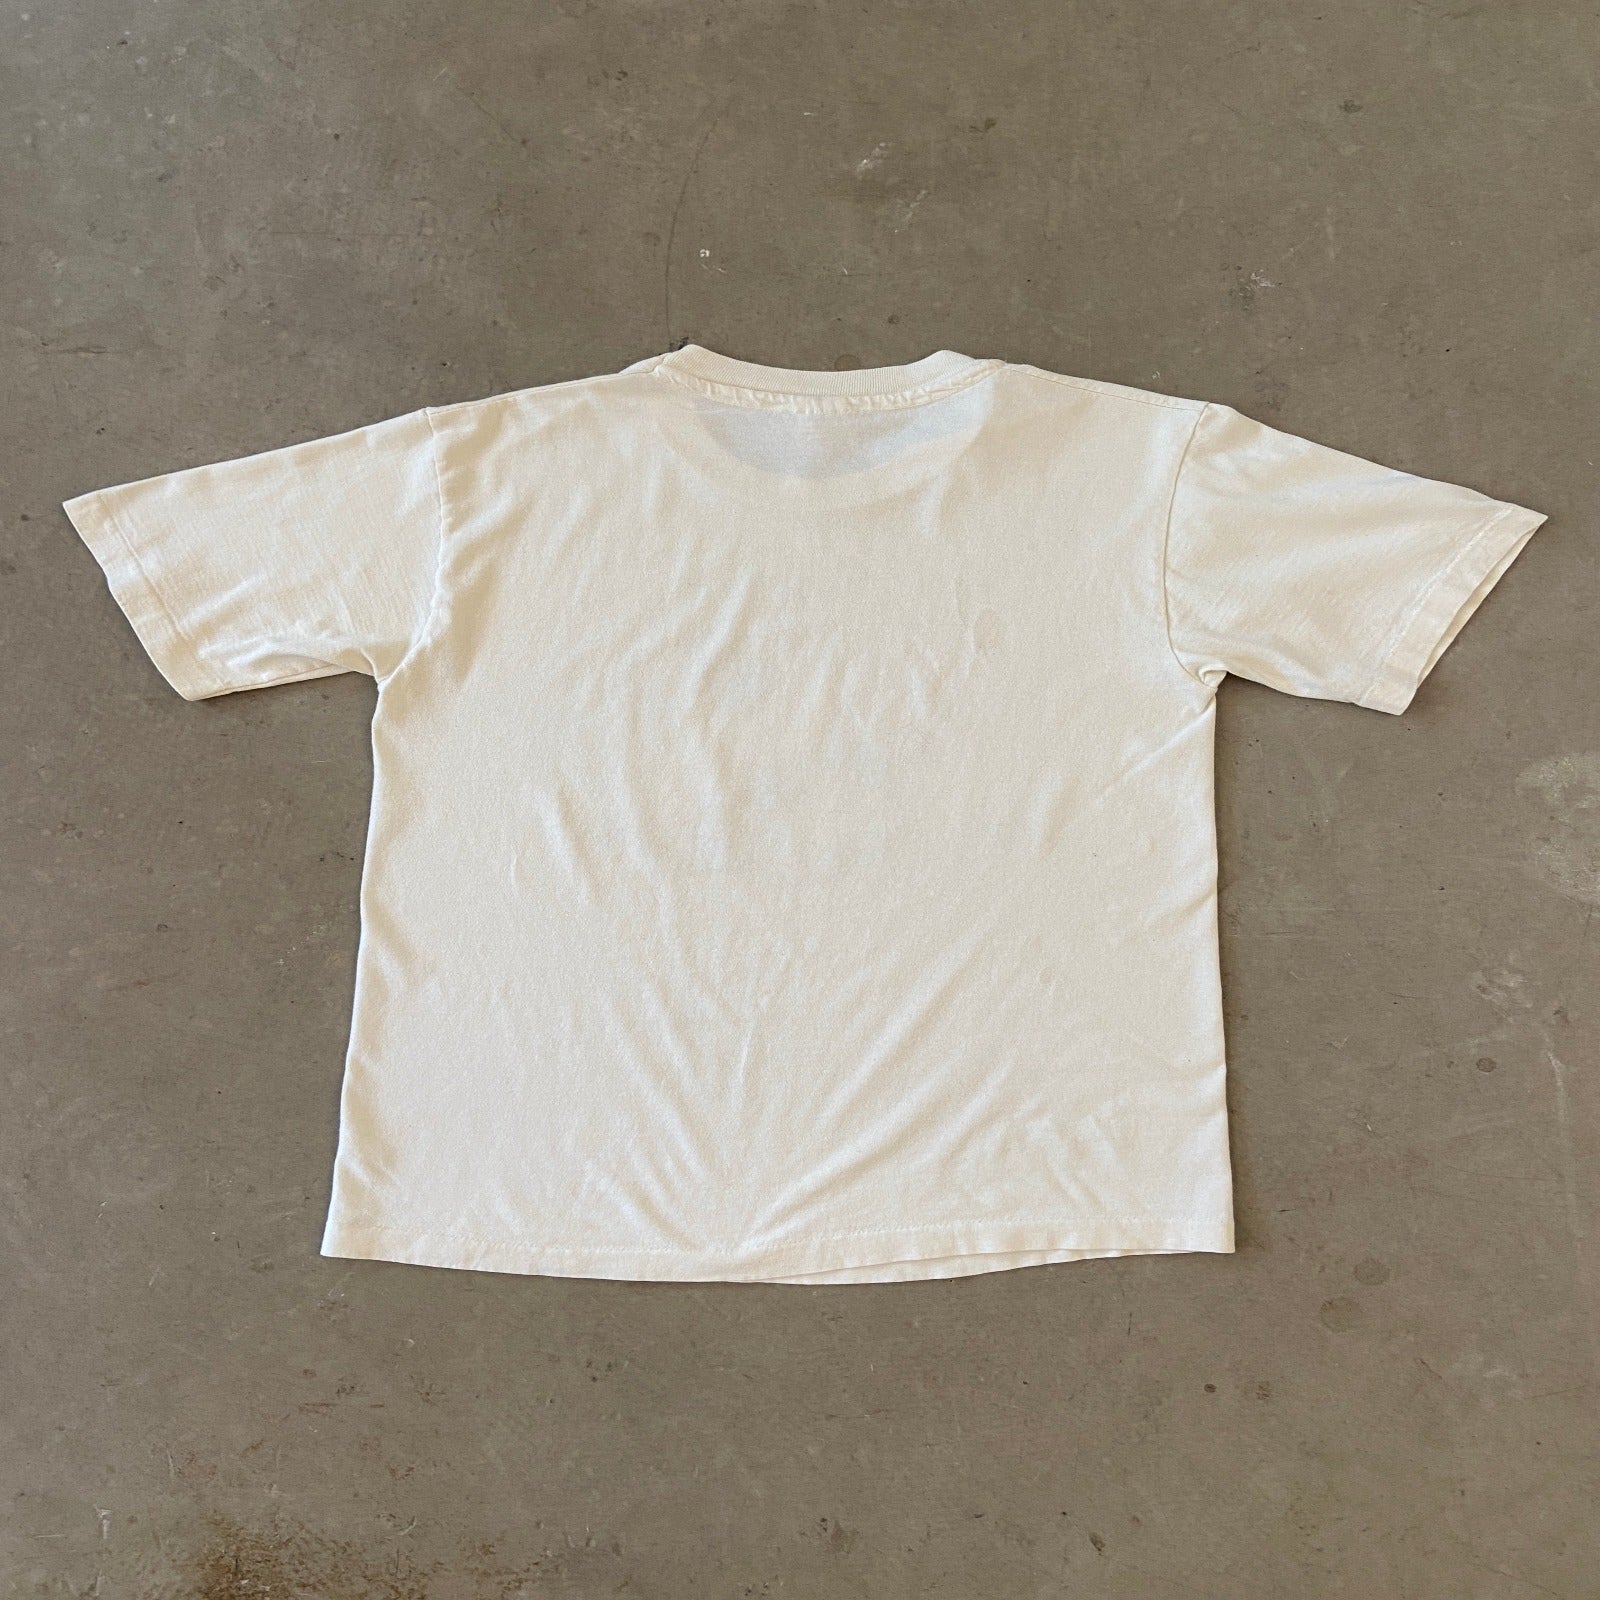 1993 Pugs T-shirt - M